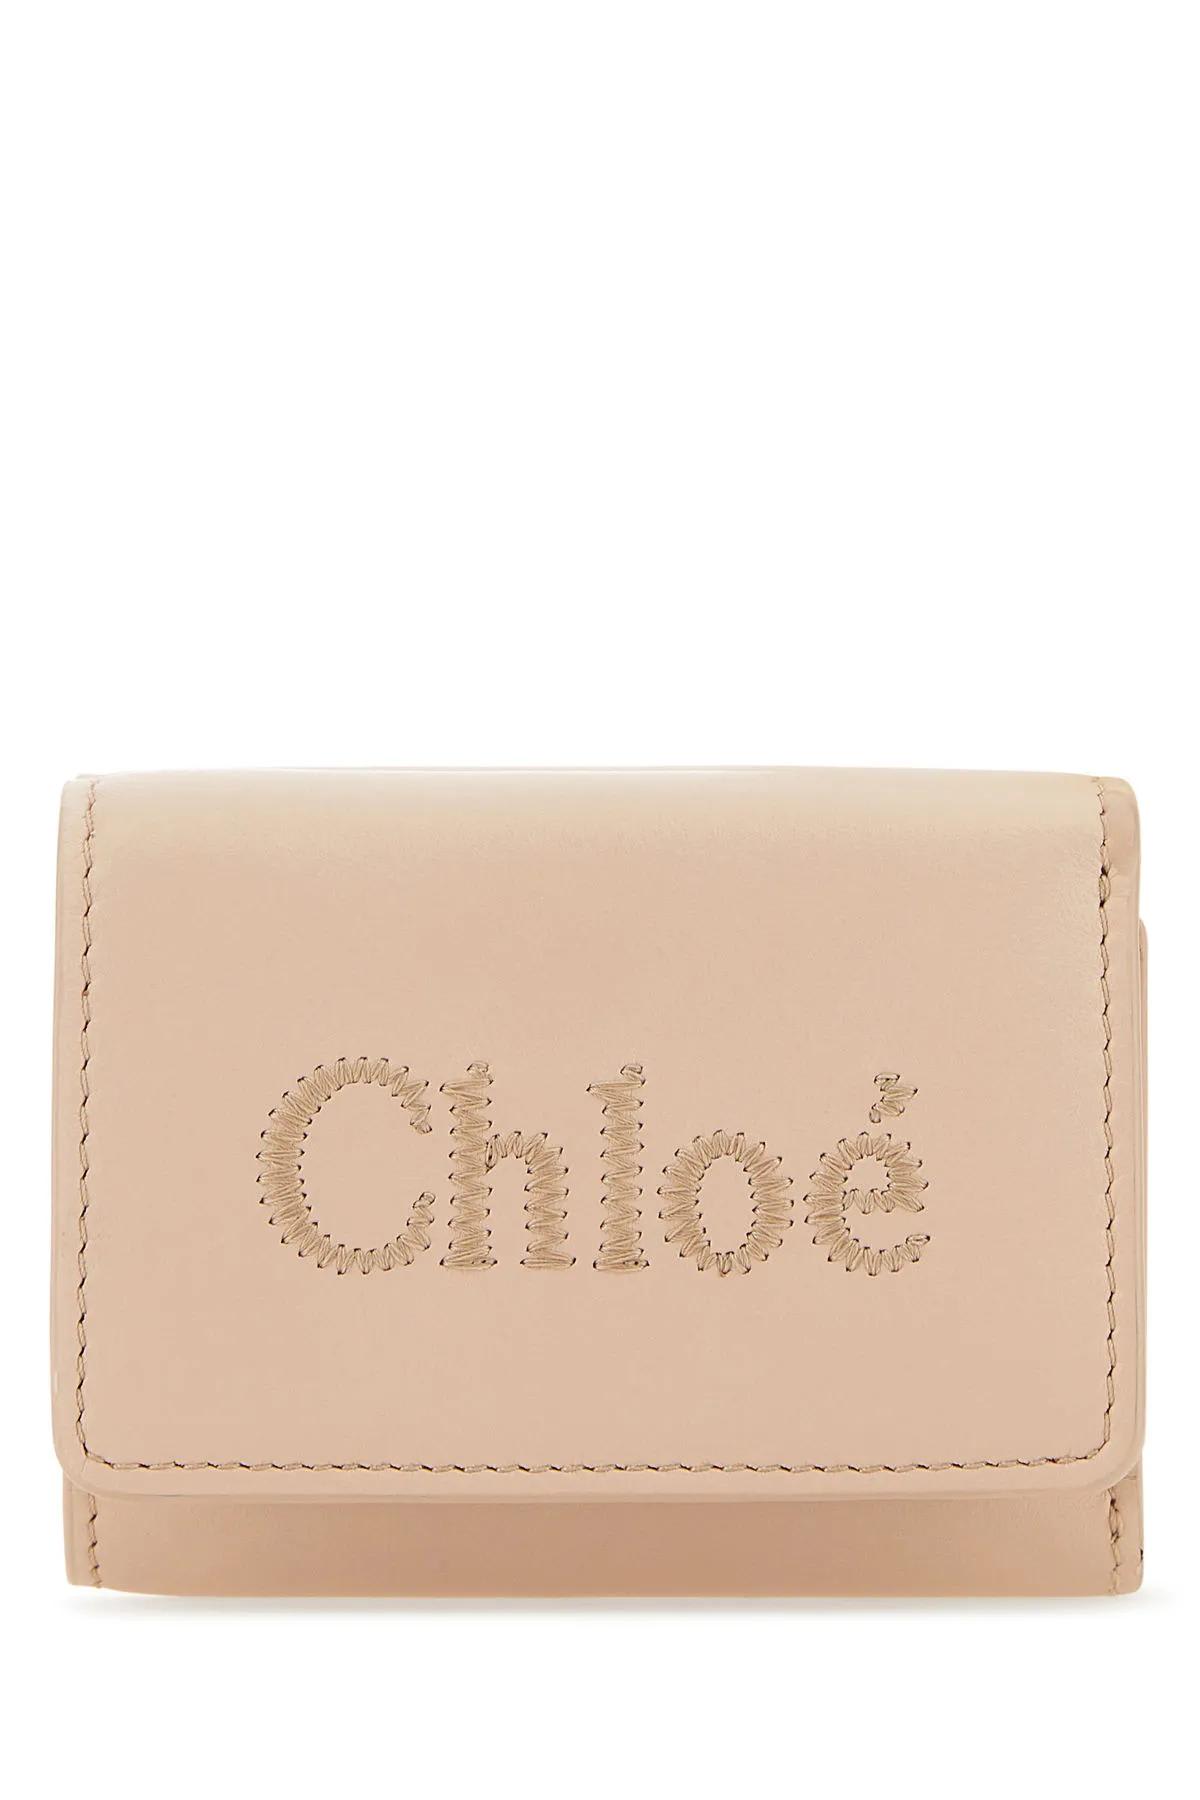 Shop Chloé Powder Pink Leather Wallet